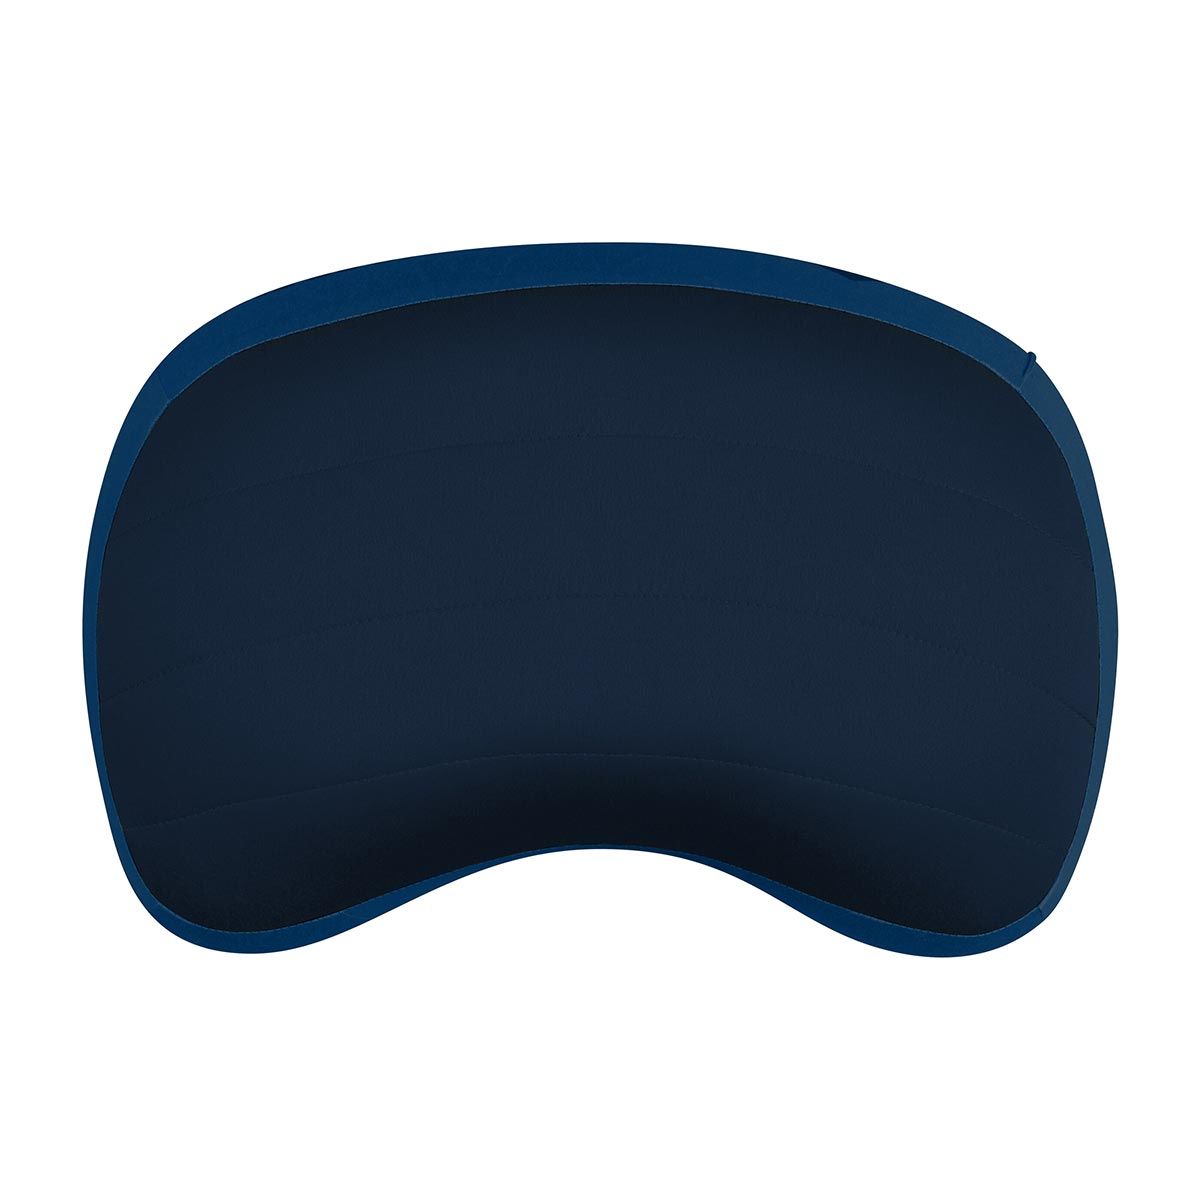 Sea to Summit Aero Premium inflatable pillow - Regular - Blue